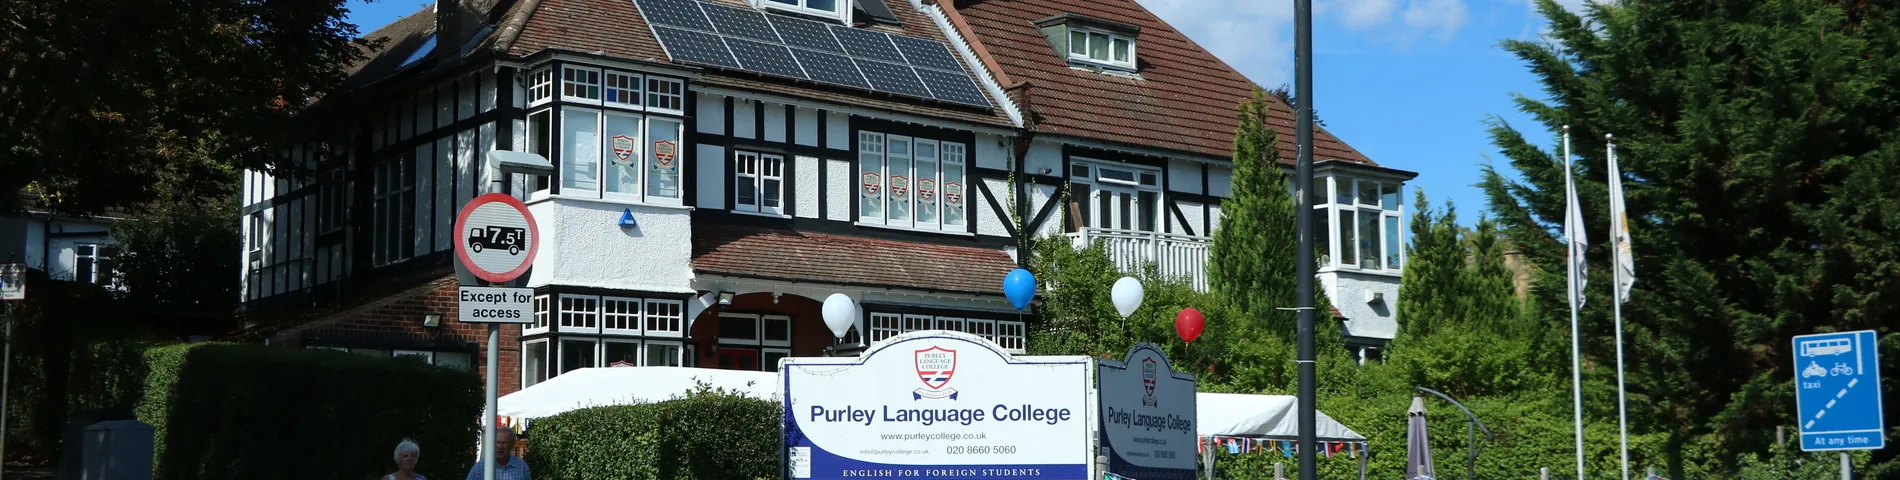 Purley Language College obrazek 1